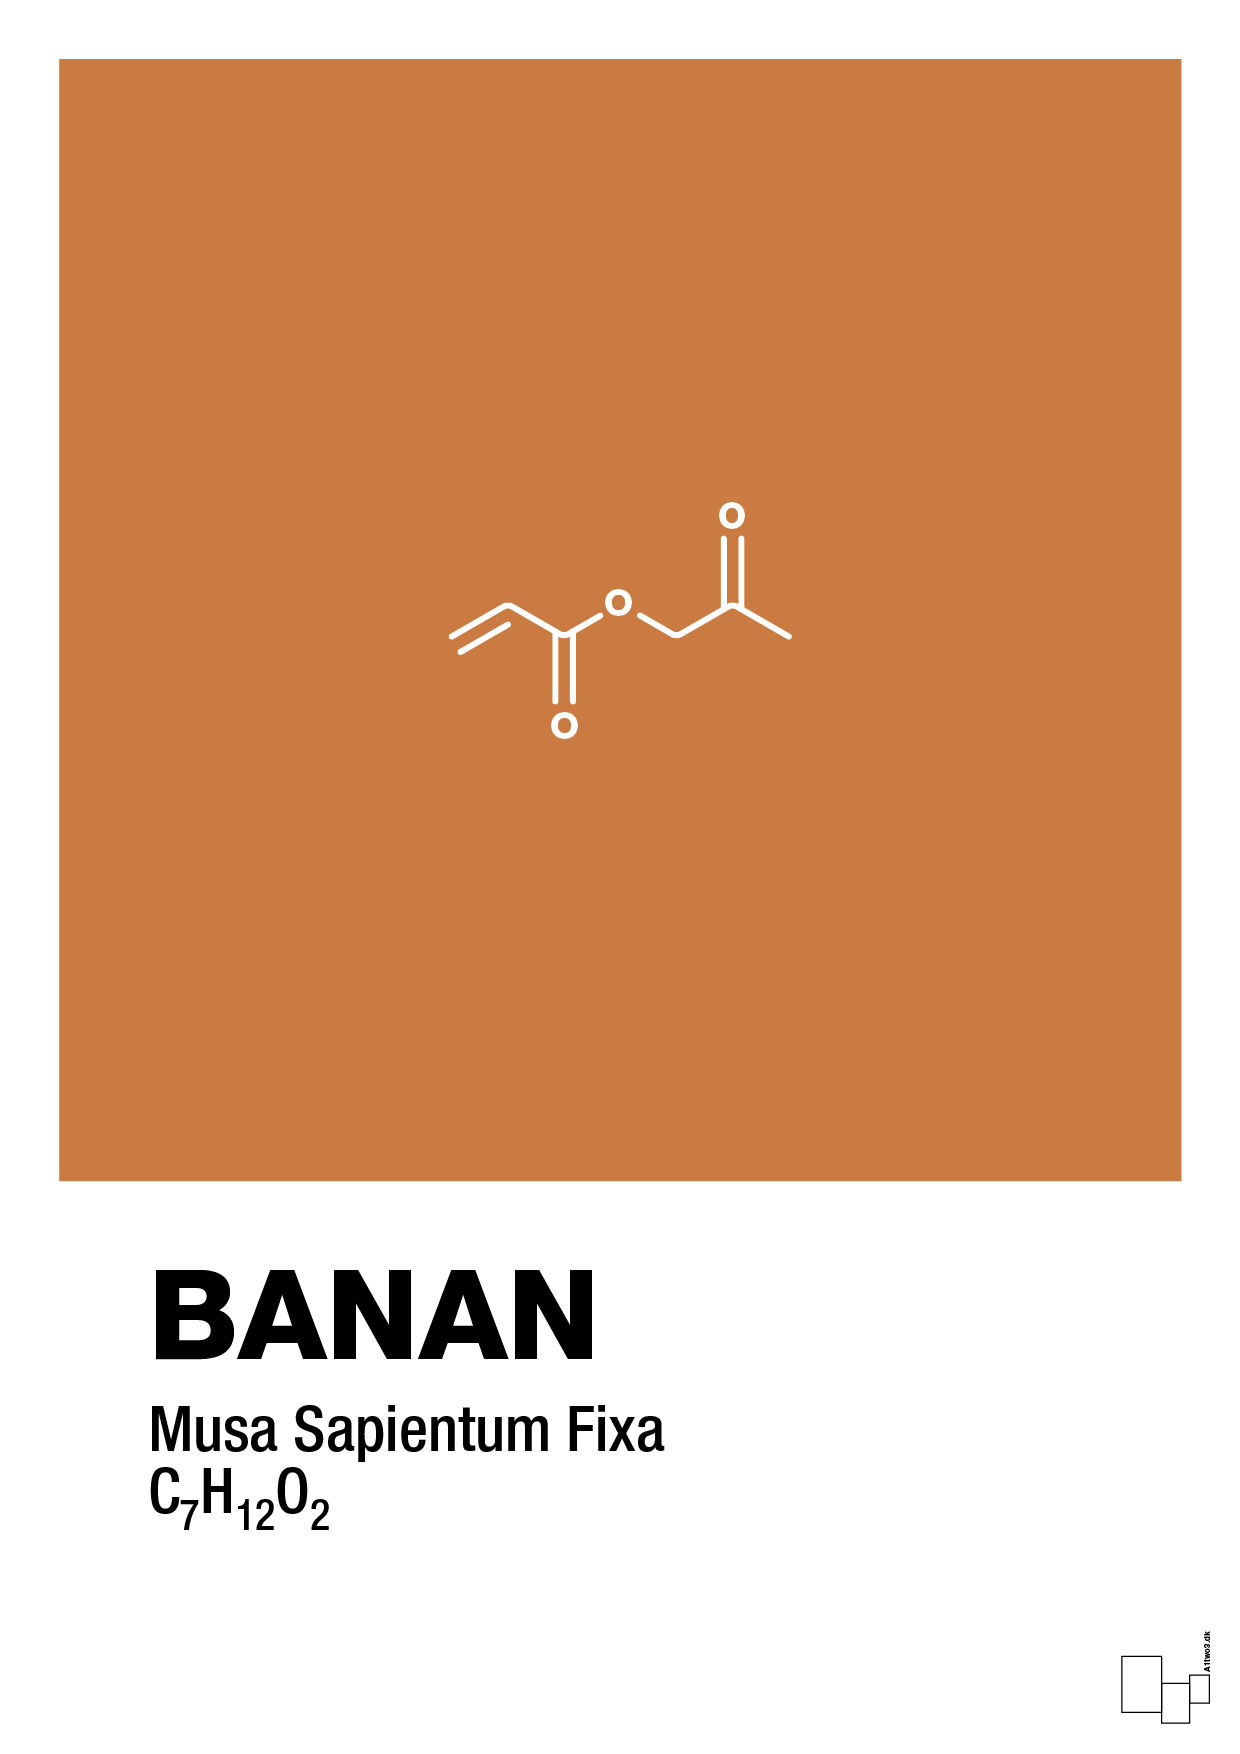 banan - Plakat med Videnskab i Rumba Orange